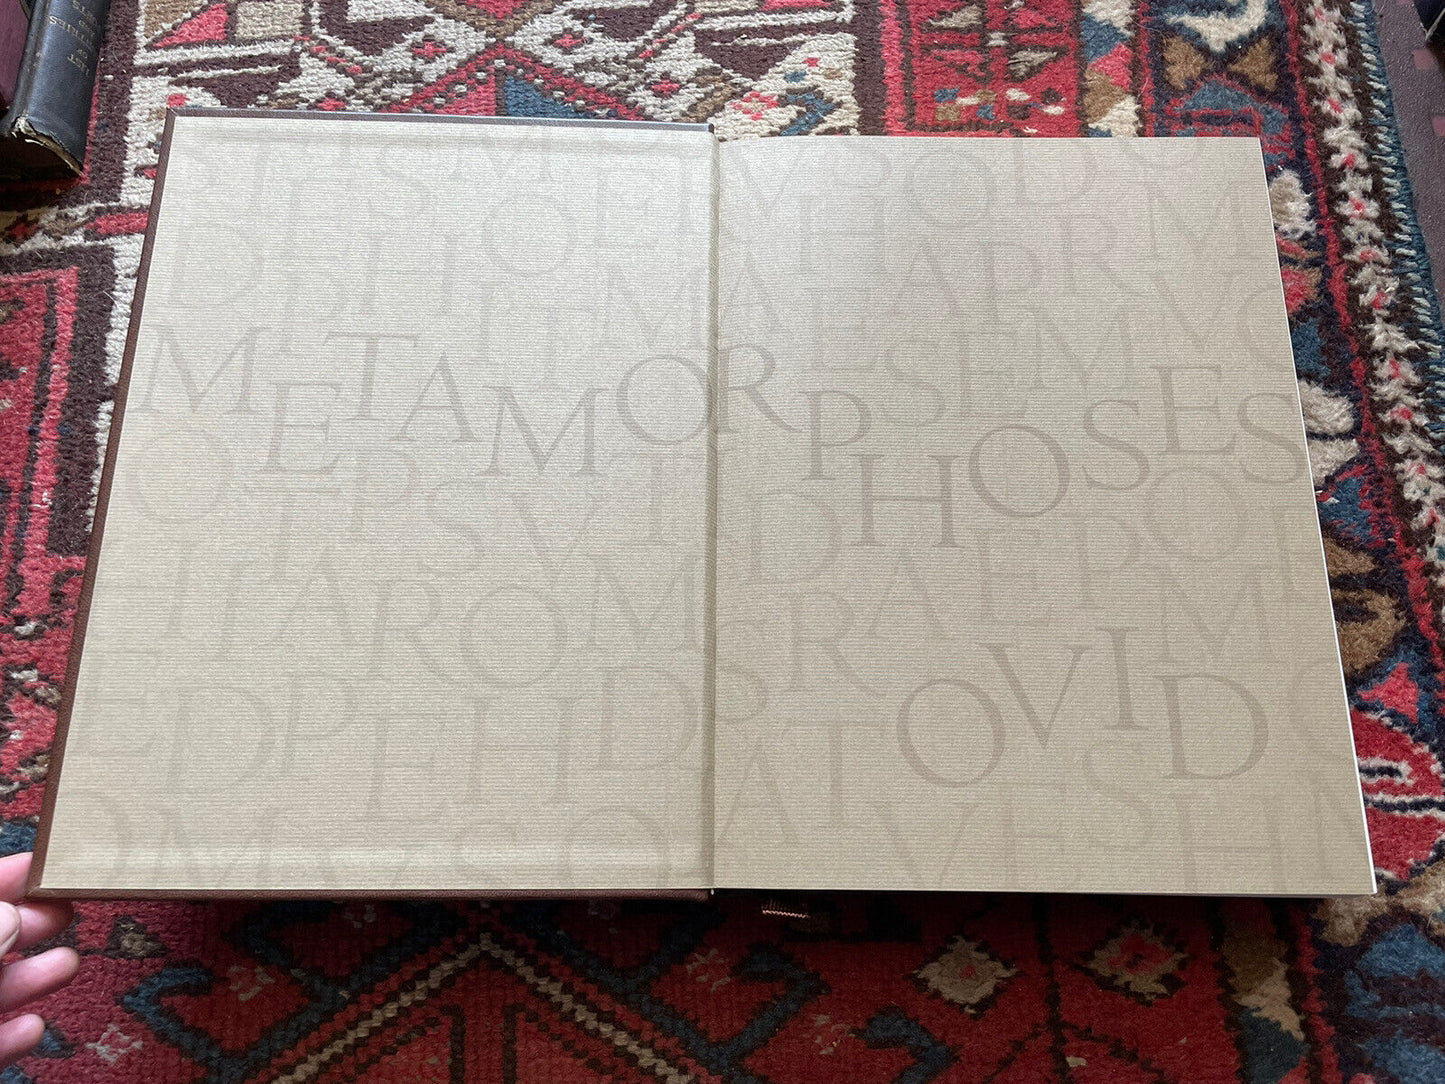 Ovid's Metamorphoses : Ltd Edition : Folio Society : Full Leather in Clamshell Box